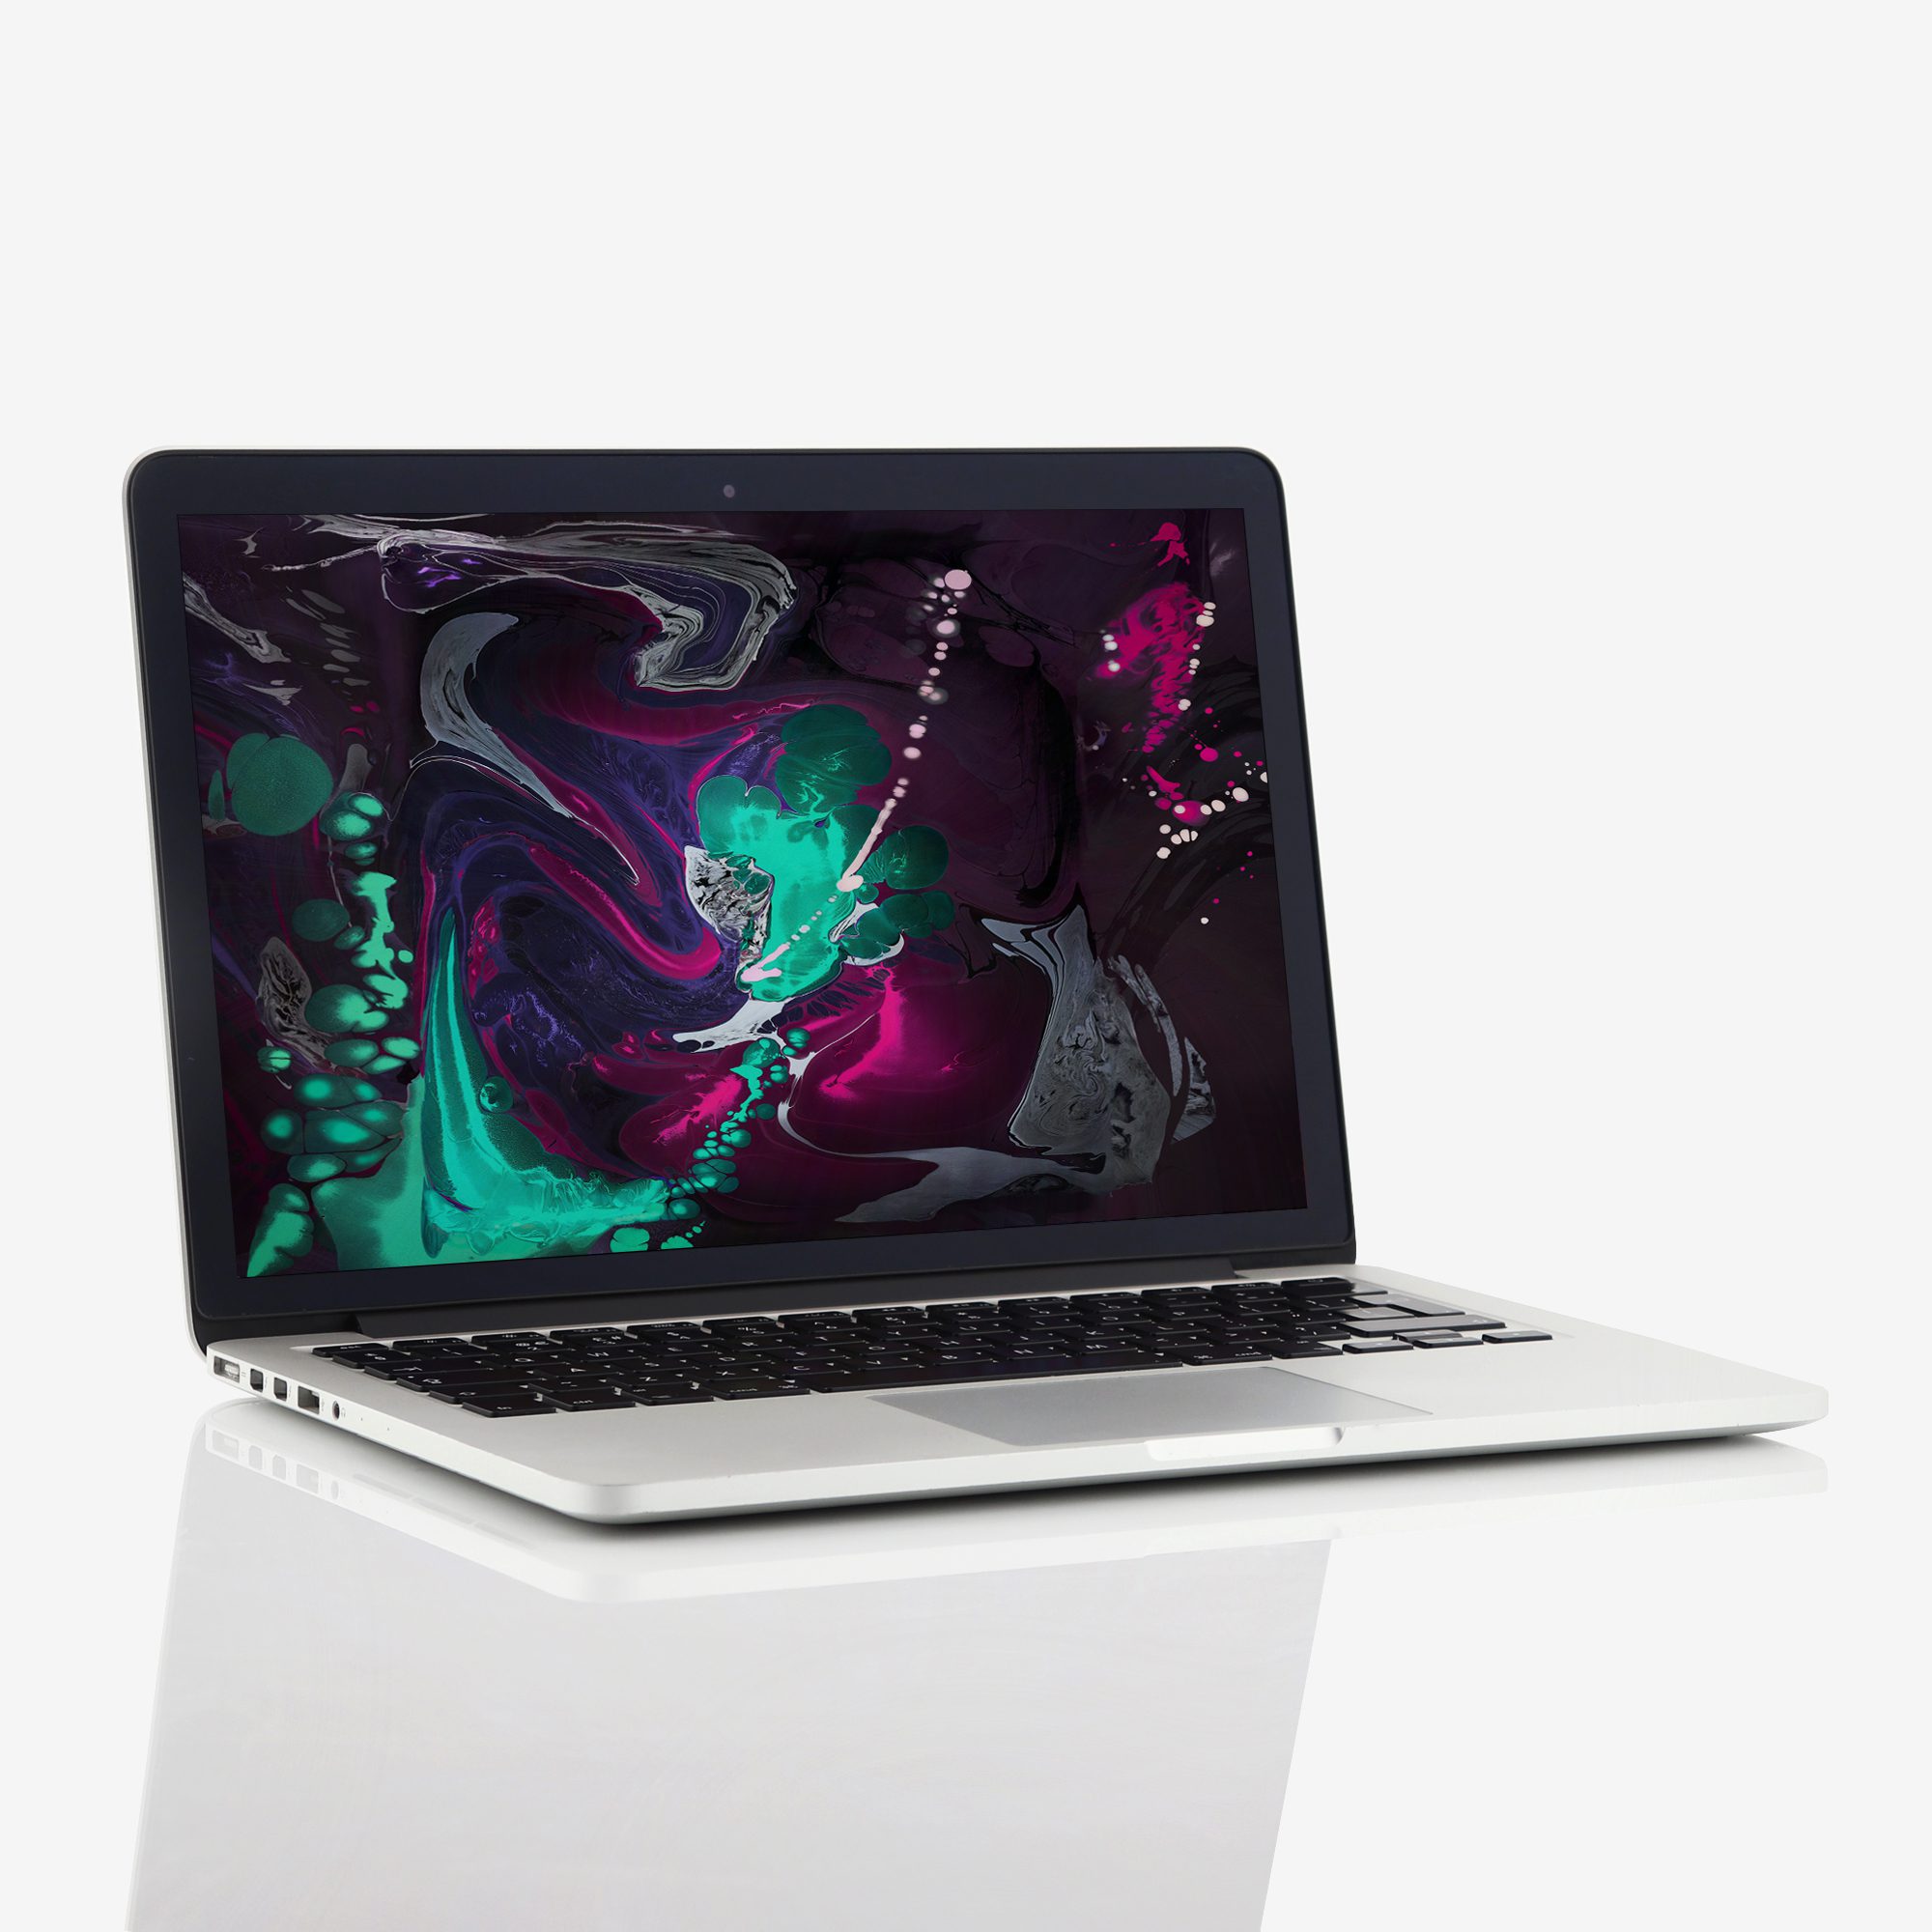 1 x Apple MacBook Pro Retina 13 Inch Intel Core i7 2.80 GHz (2013)